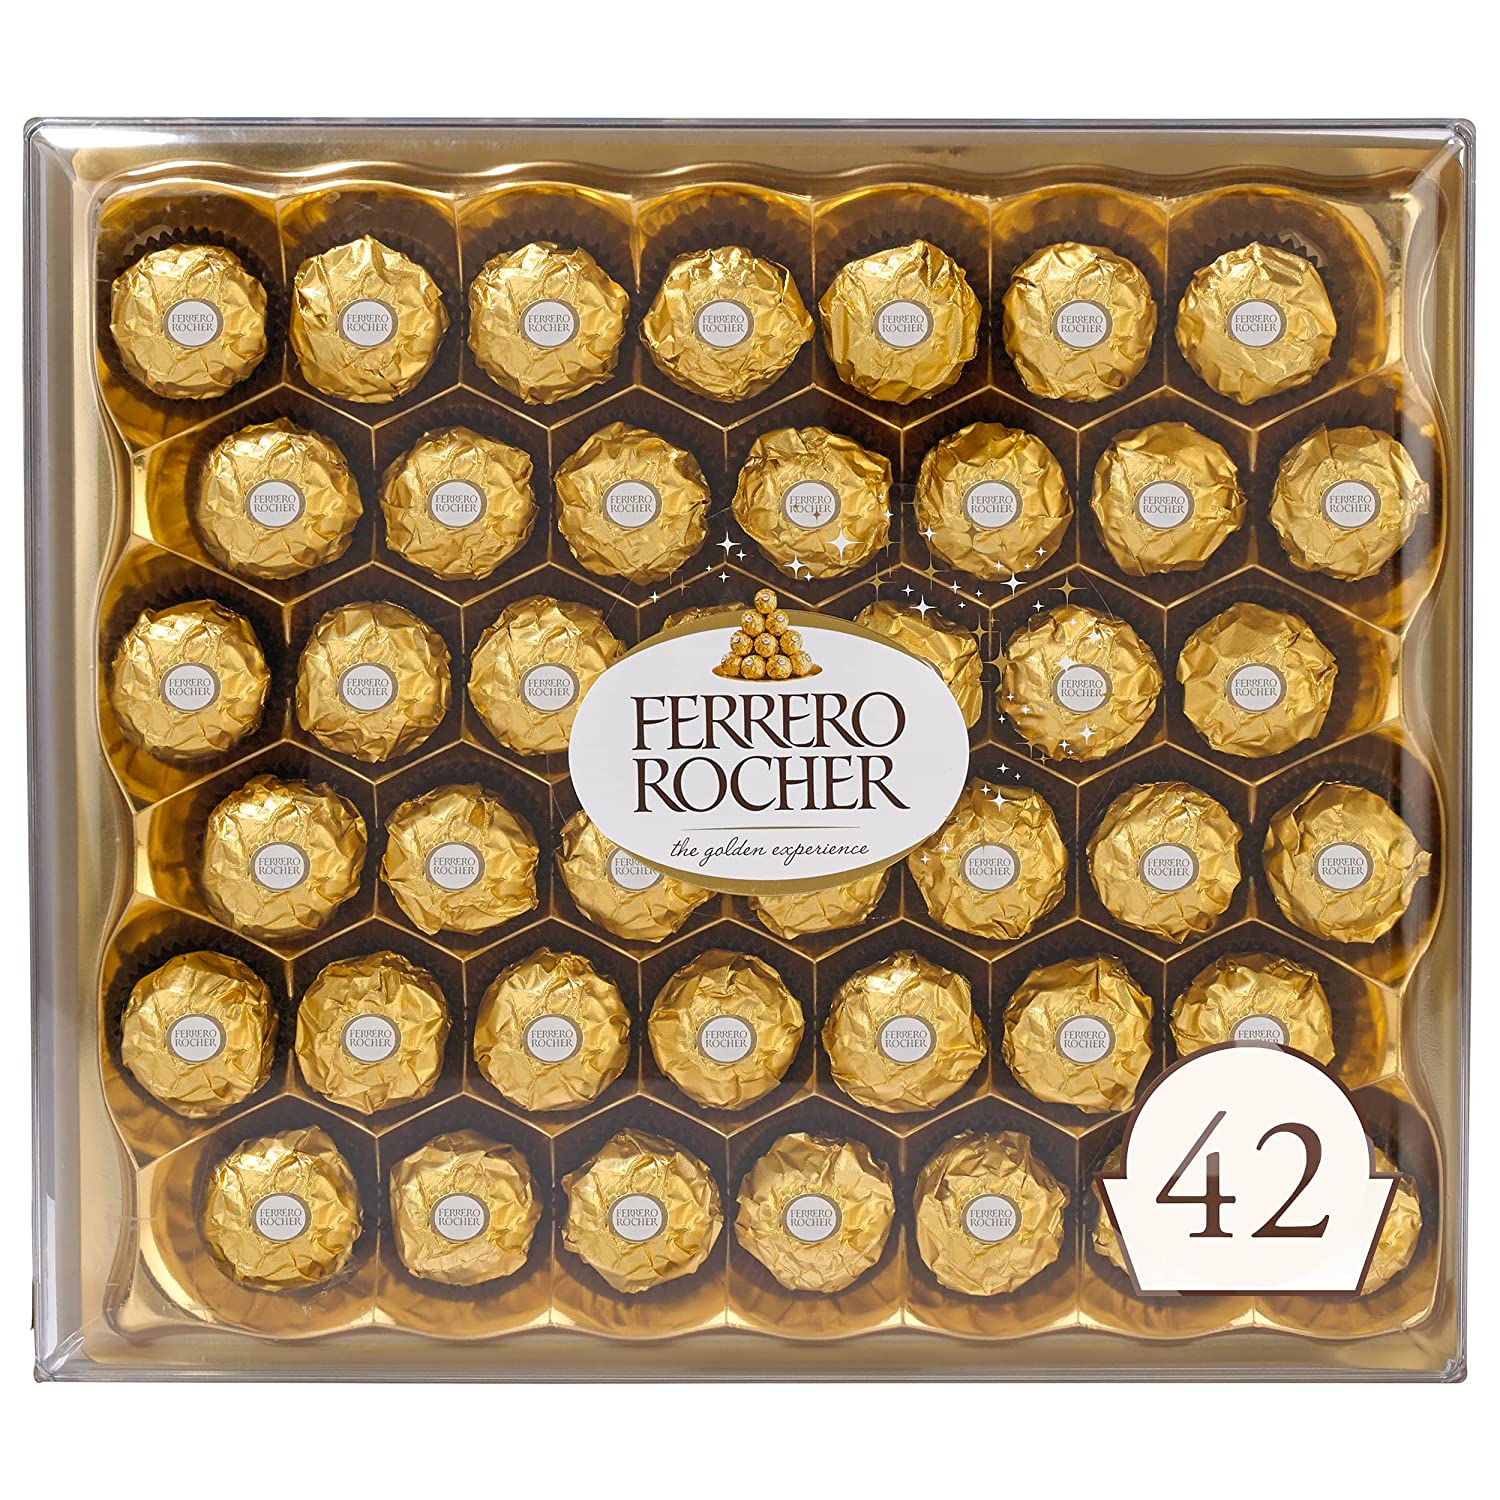 42-Count 18.5-Oz Ferrero Rocher Fine Hazelnut Milk Chocolates Gift Box $13.11 + Free Shipping w/ Prime or on orders over $35